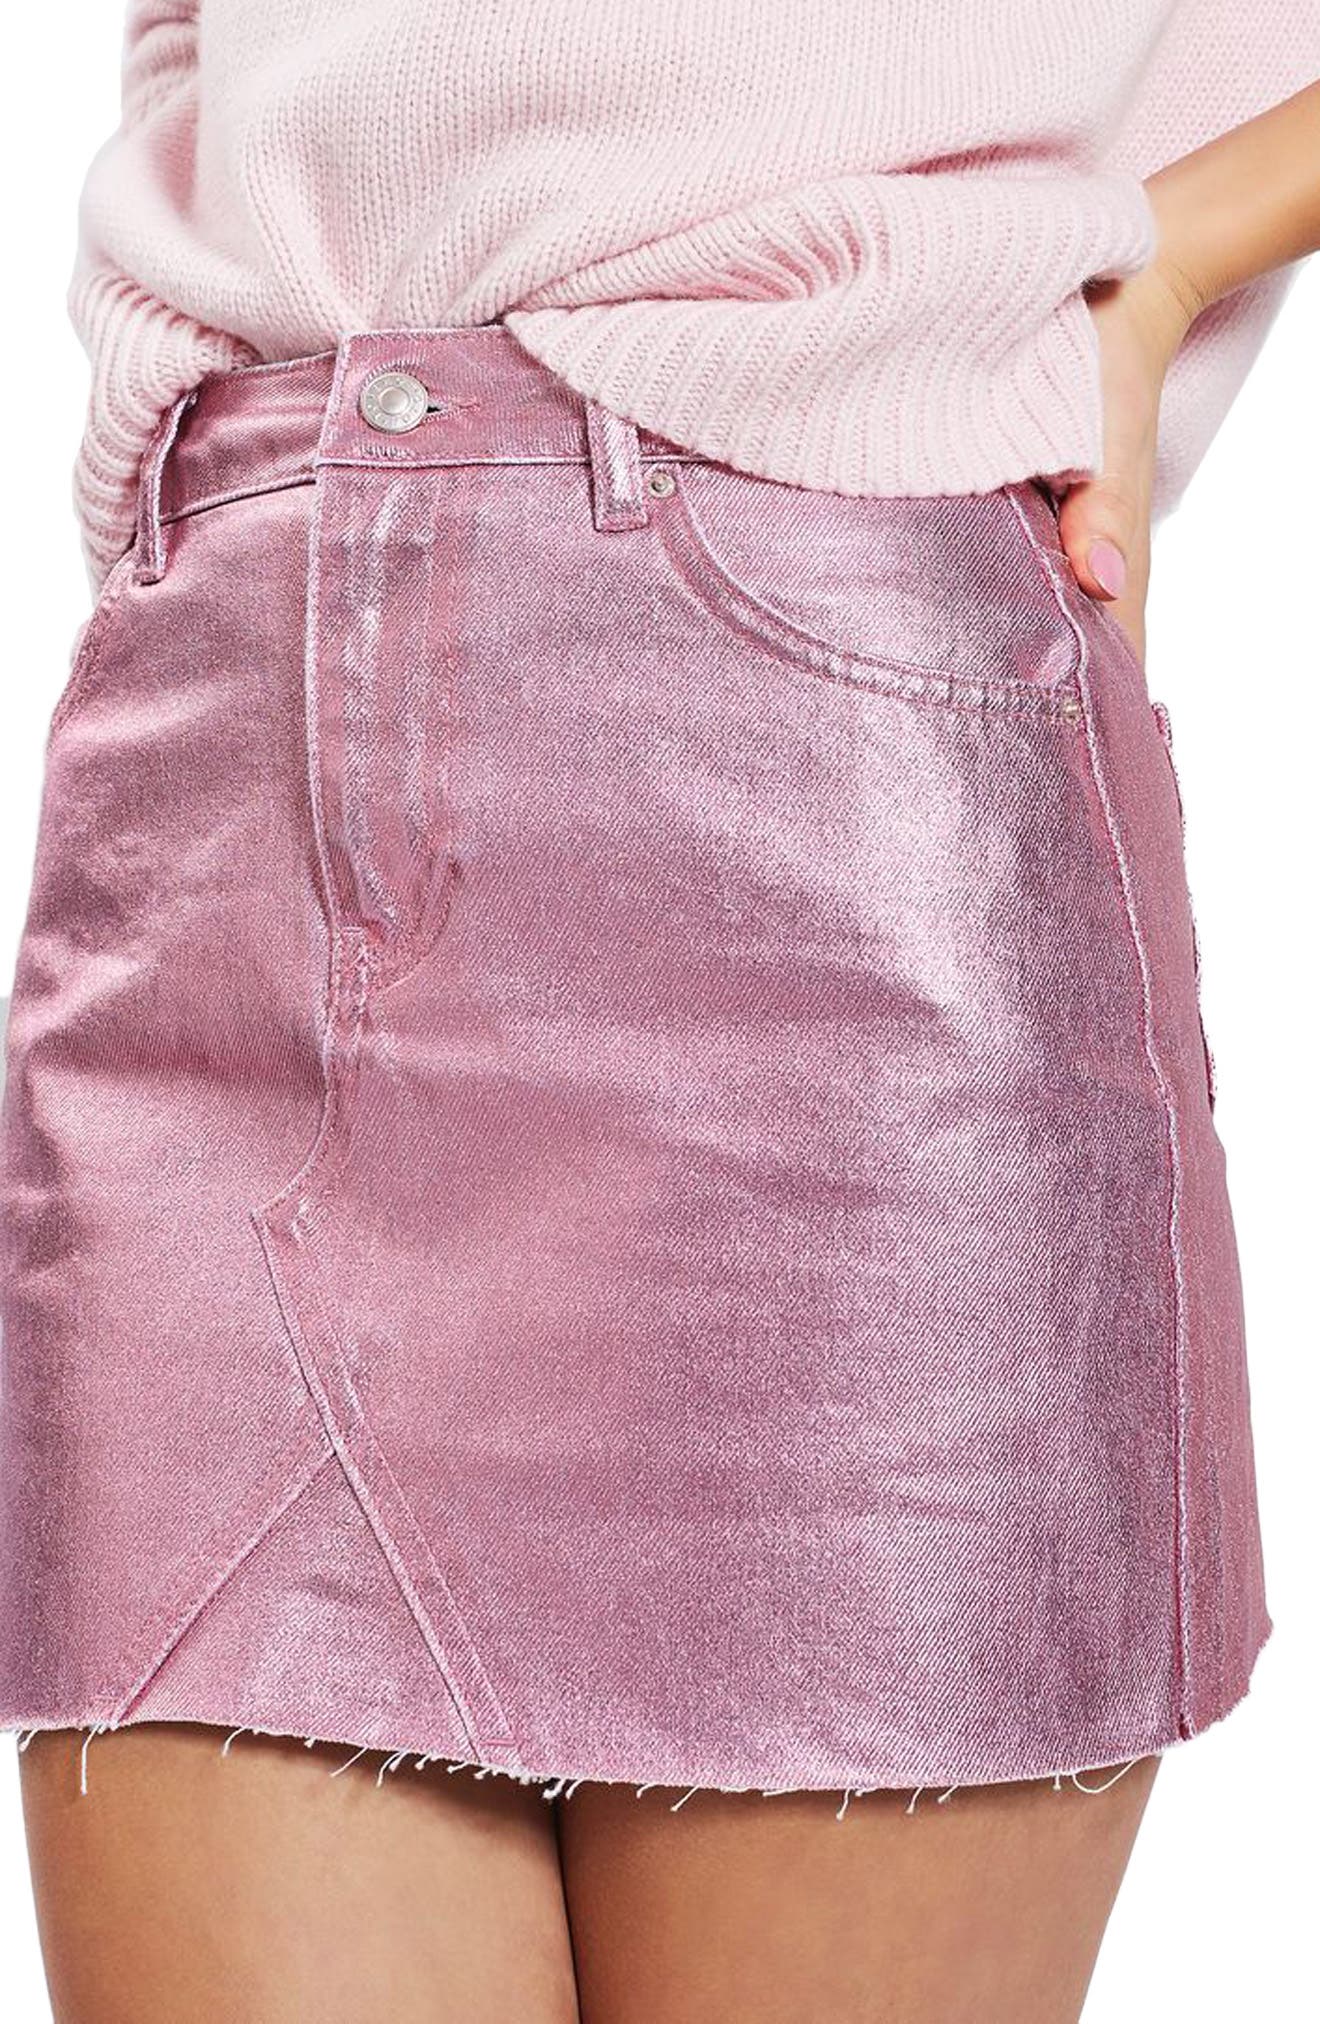 metallic denim skirt